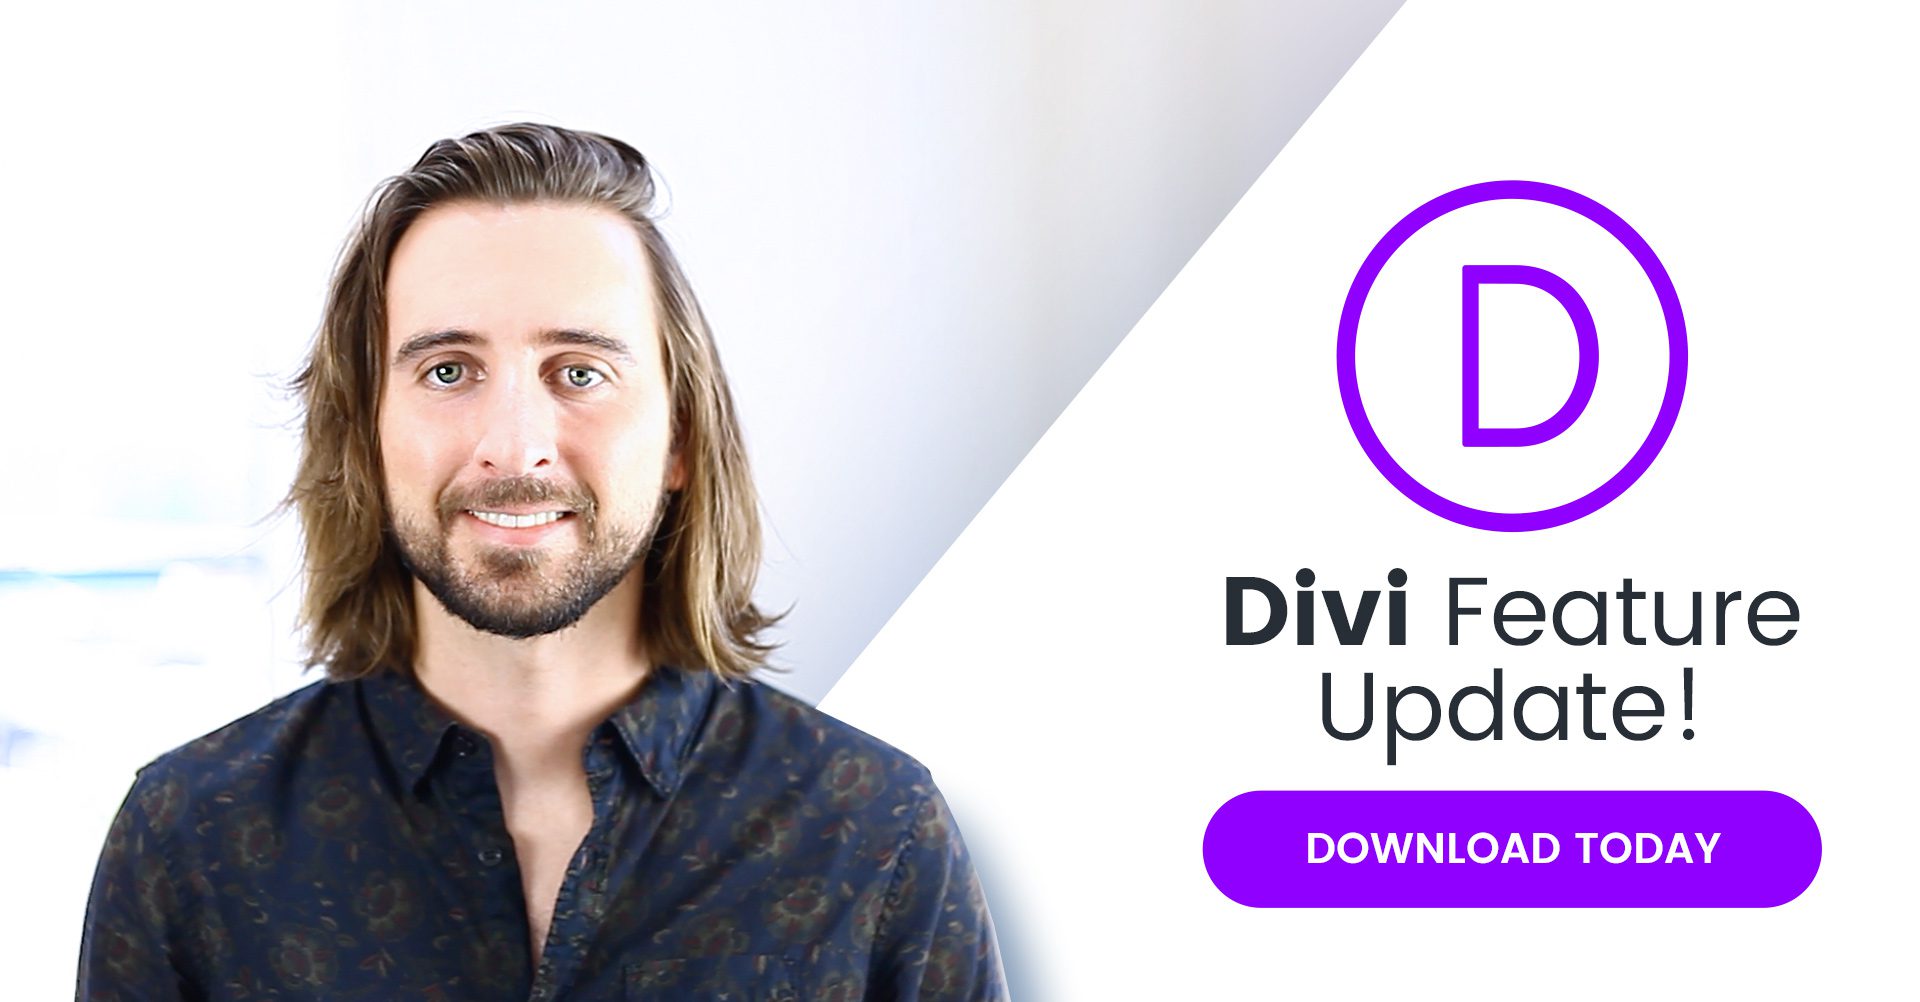 Divi Feature Update! Introducing Uniquely Effective Product Tours For Divi